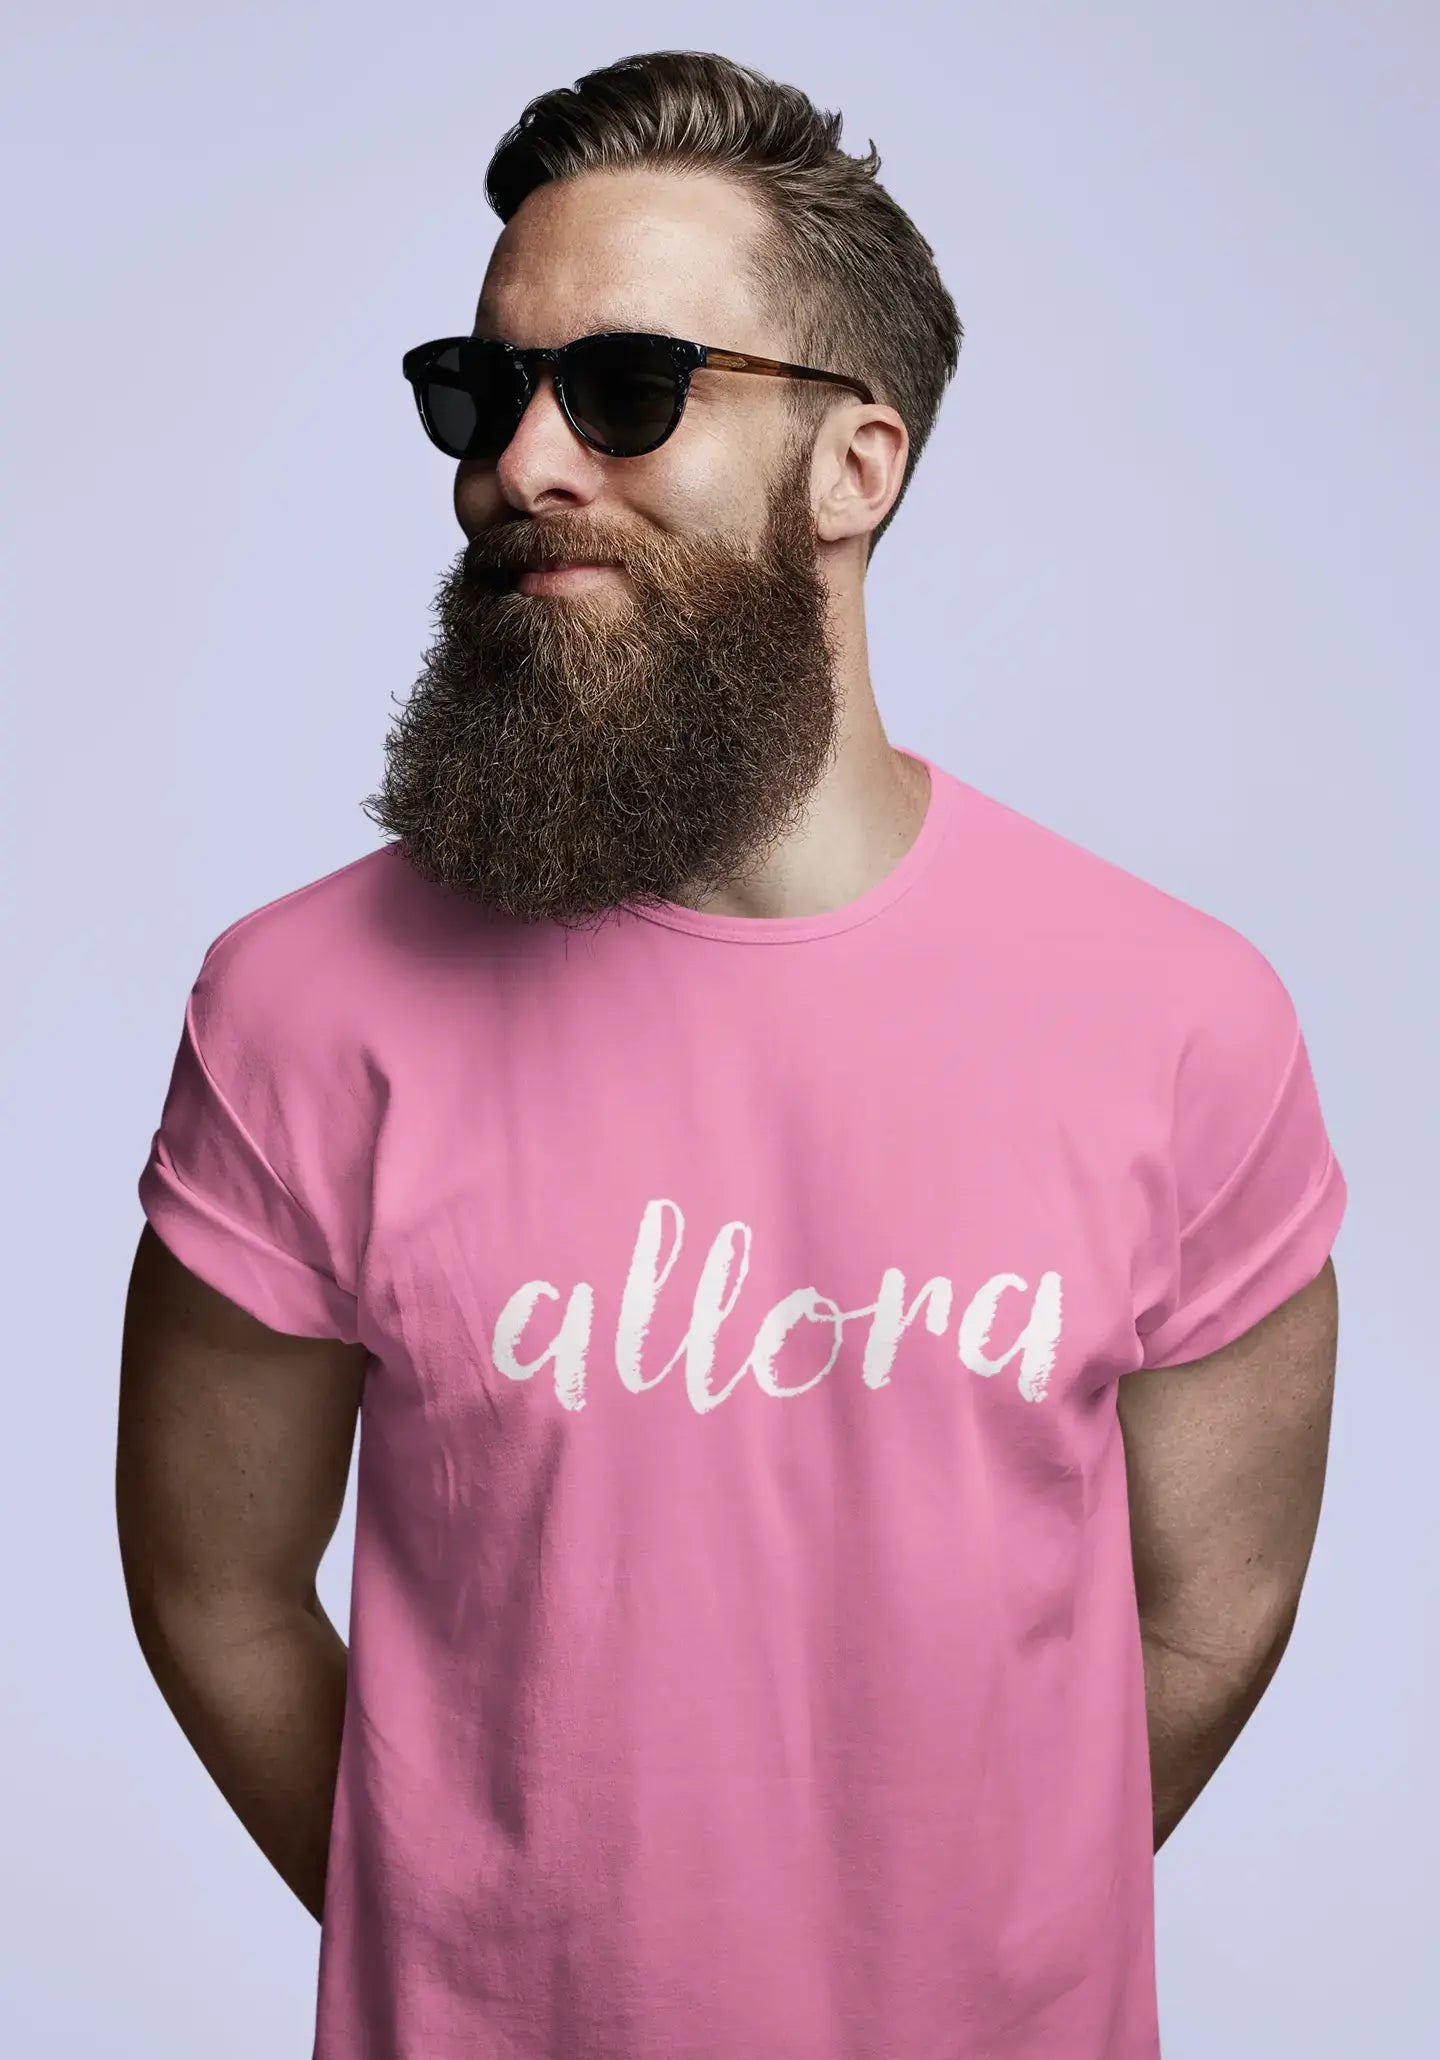 ULTRABASIC - Graphic Printed Men's Allora T-Shirt Navy